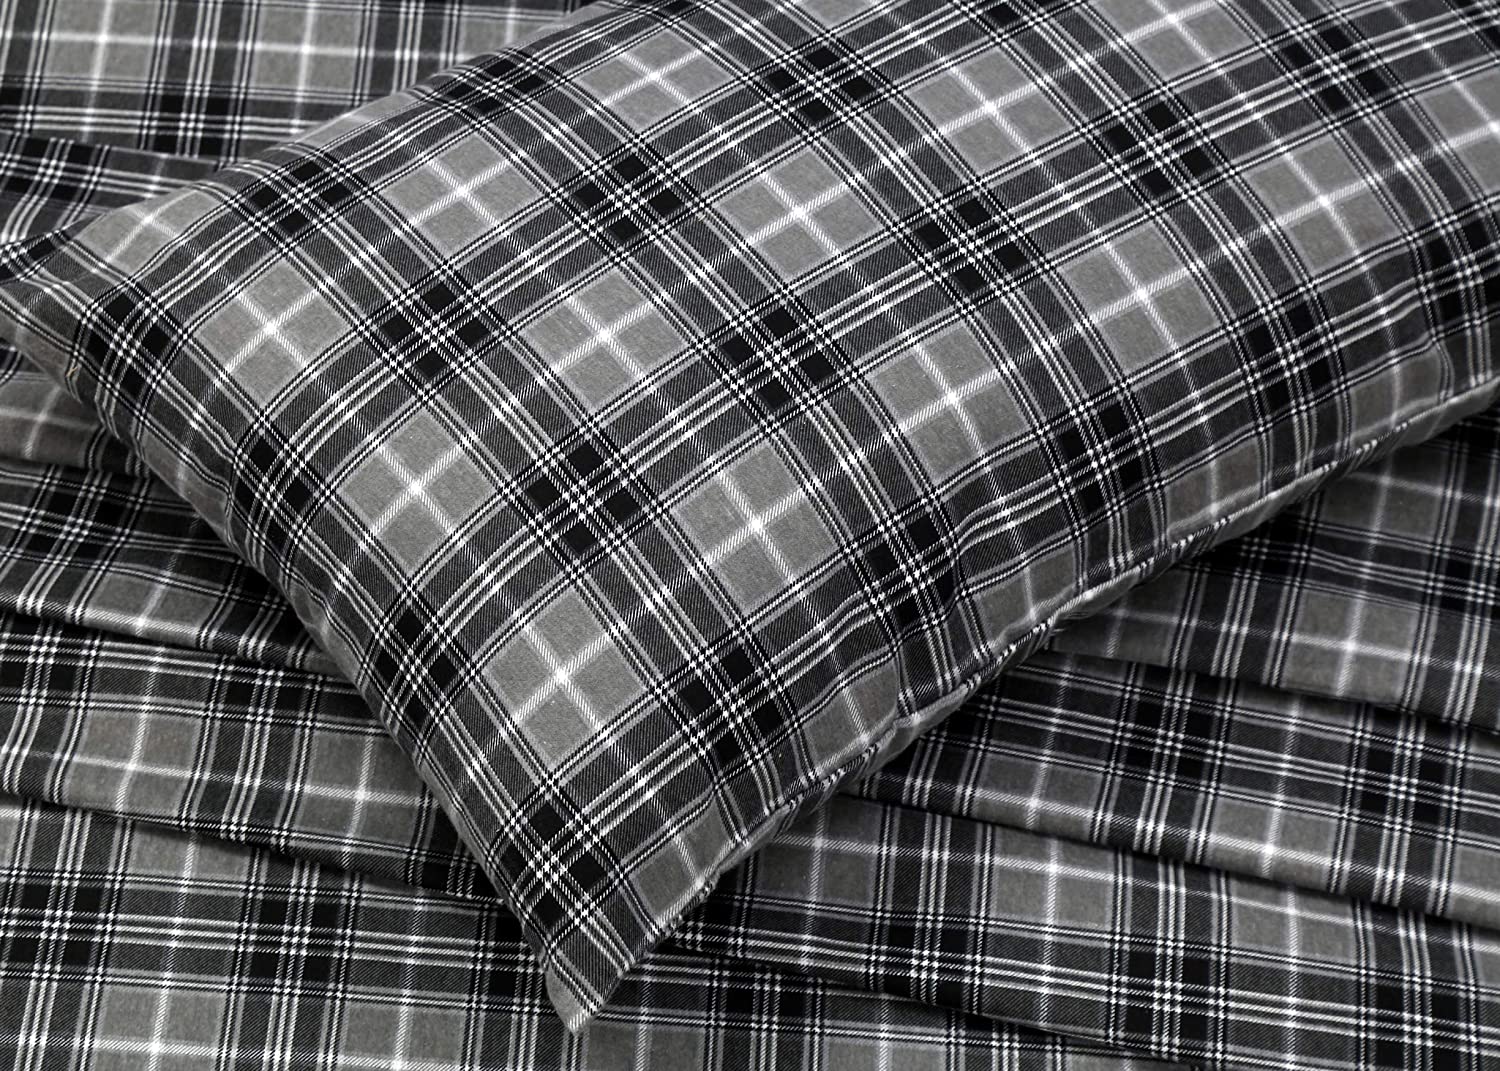 Ruvanti 100% Cotton 4 Piece Flannel Sheets Queen - Deep Pocket - Warm - Super Soft - Breathable Flannel Bed Sheets Set Queen Include Flat Sheet, Fitted Sheet & 2 Pillowcases (Buffalo Check Grey Plaid) SC596